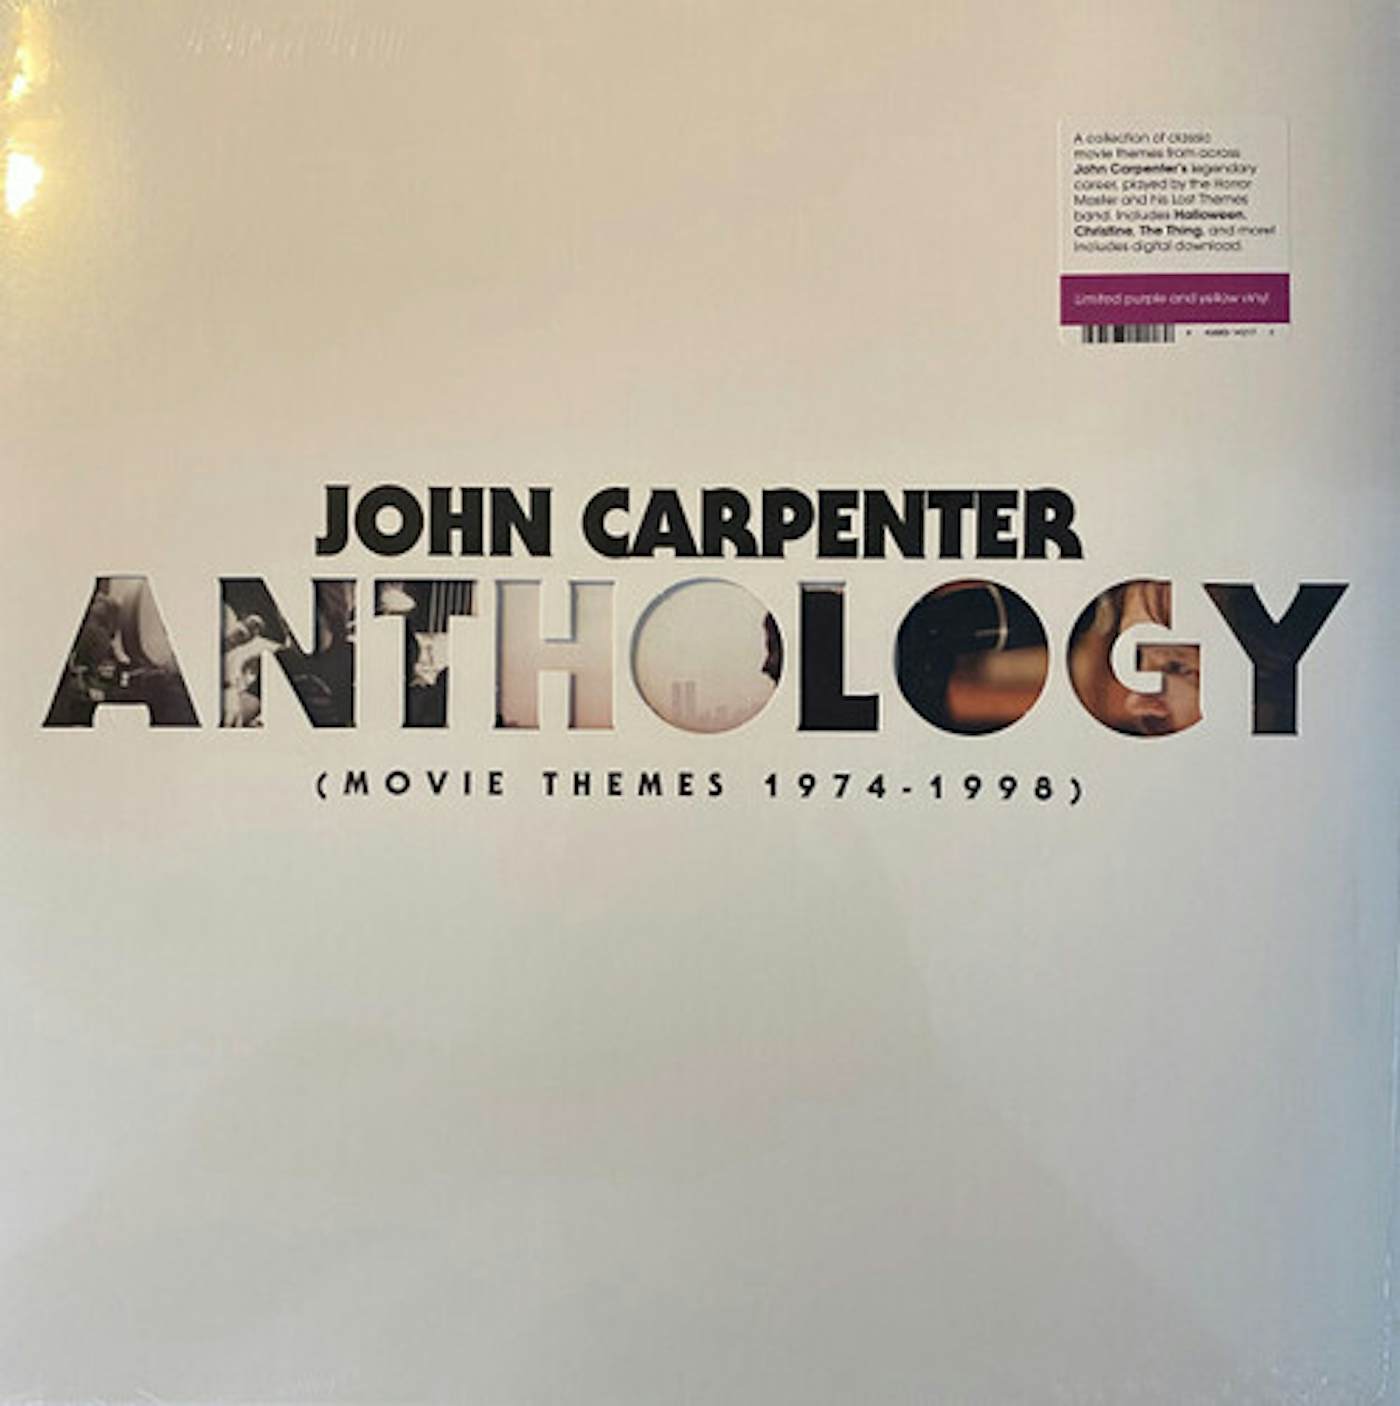 John Carpenter's They Live Soundtrack Reissue Announced